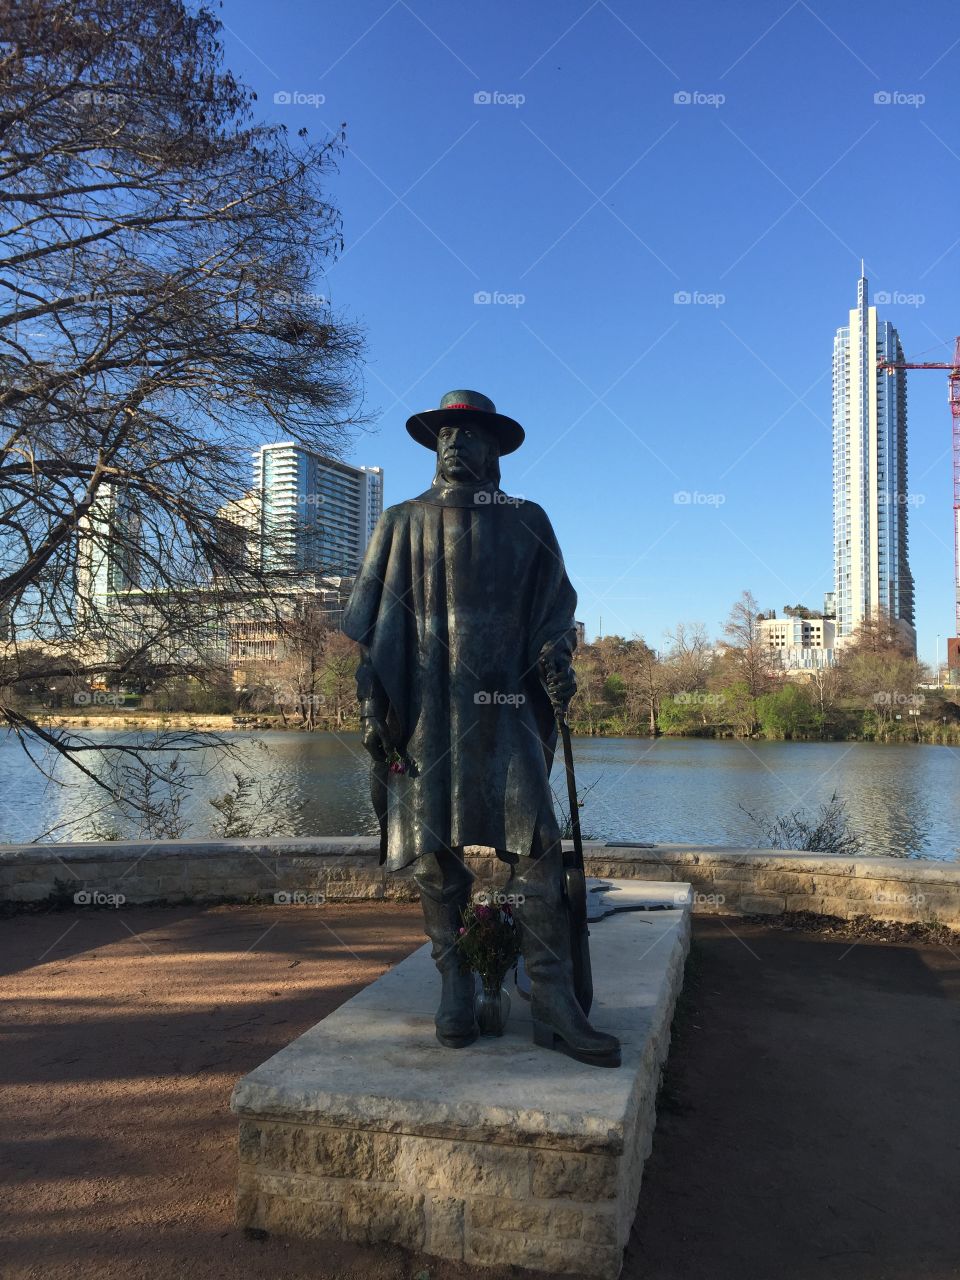 Stevie Ray Vaughan statue in Austin, TX